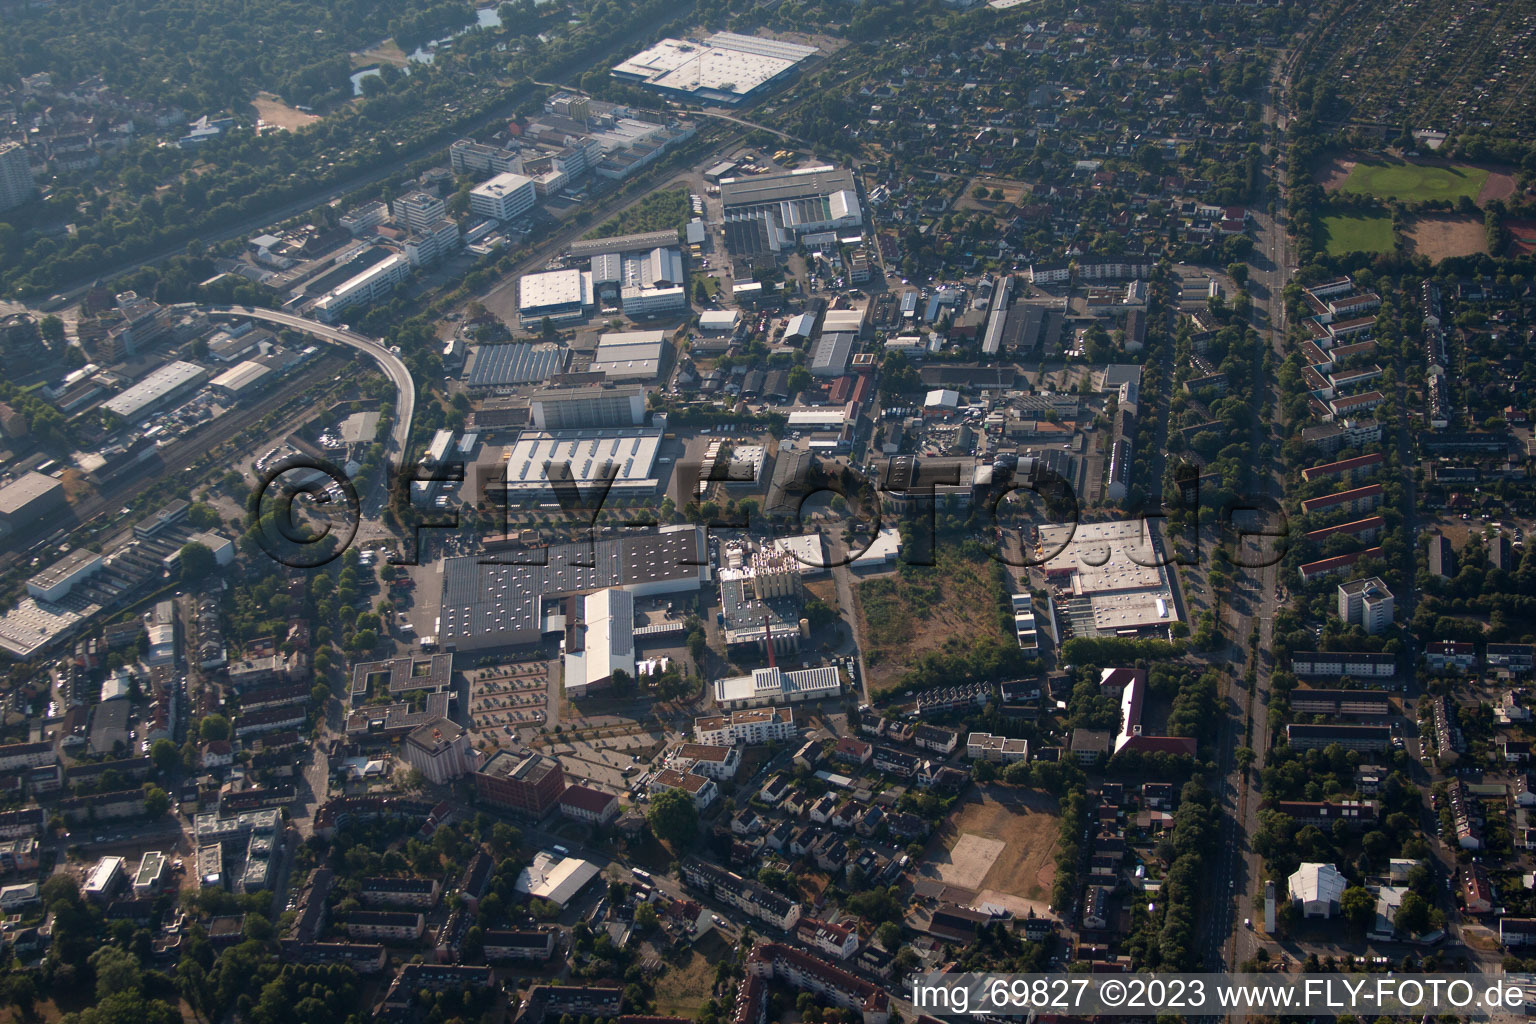 Aerial view of Pulverhausstr in the district Grünwinkel in Karlsruhe in the state Baden-Wuerttemberg, Germany